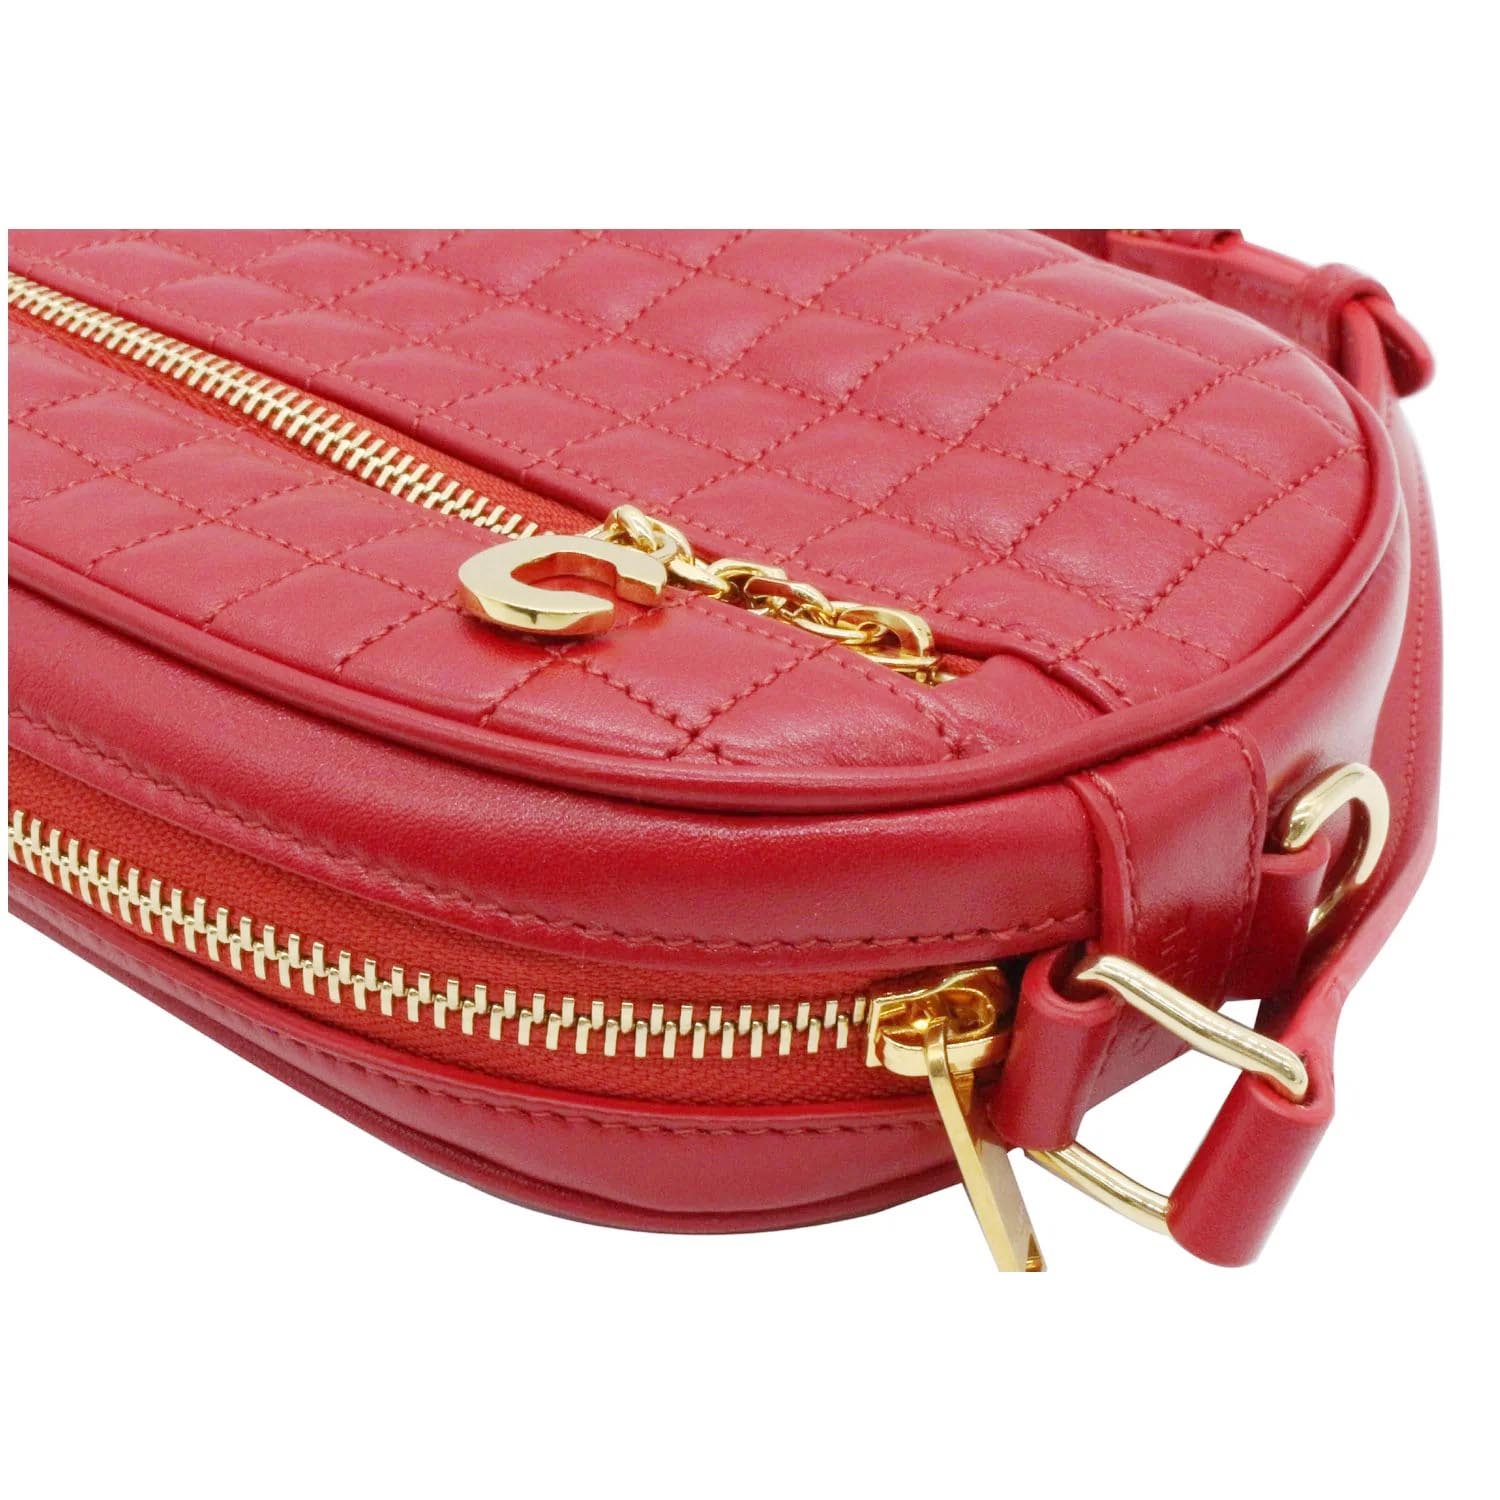 BLOG SALE - Chanel, Louis Vuitton, Celine Bags & Small leather